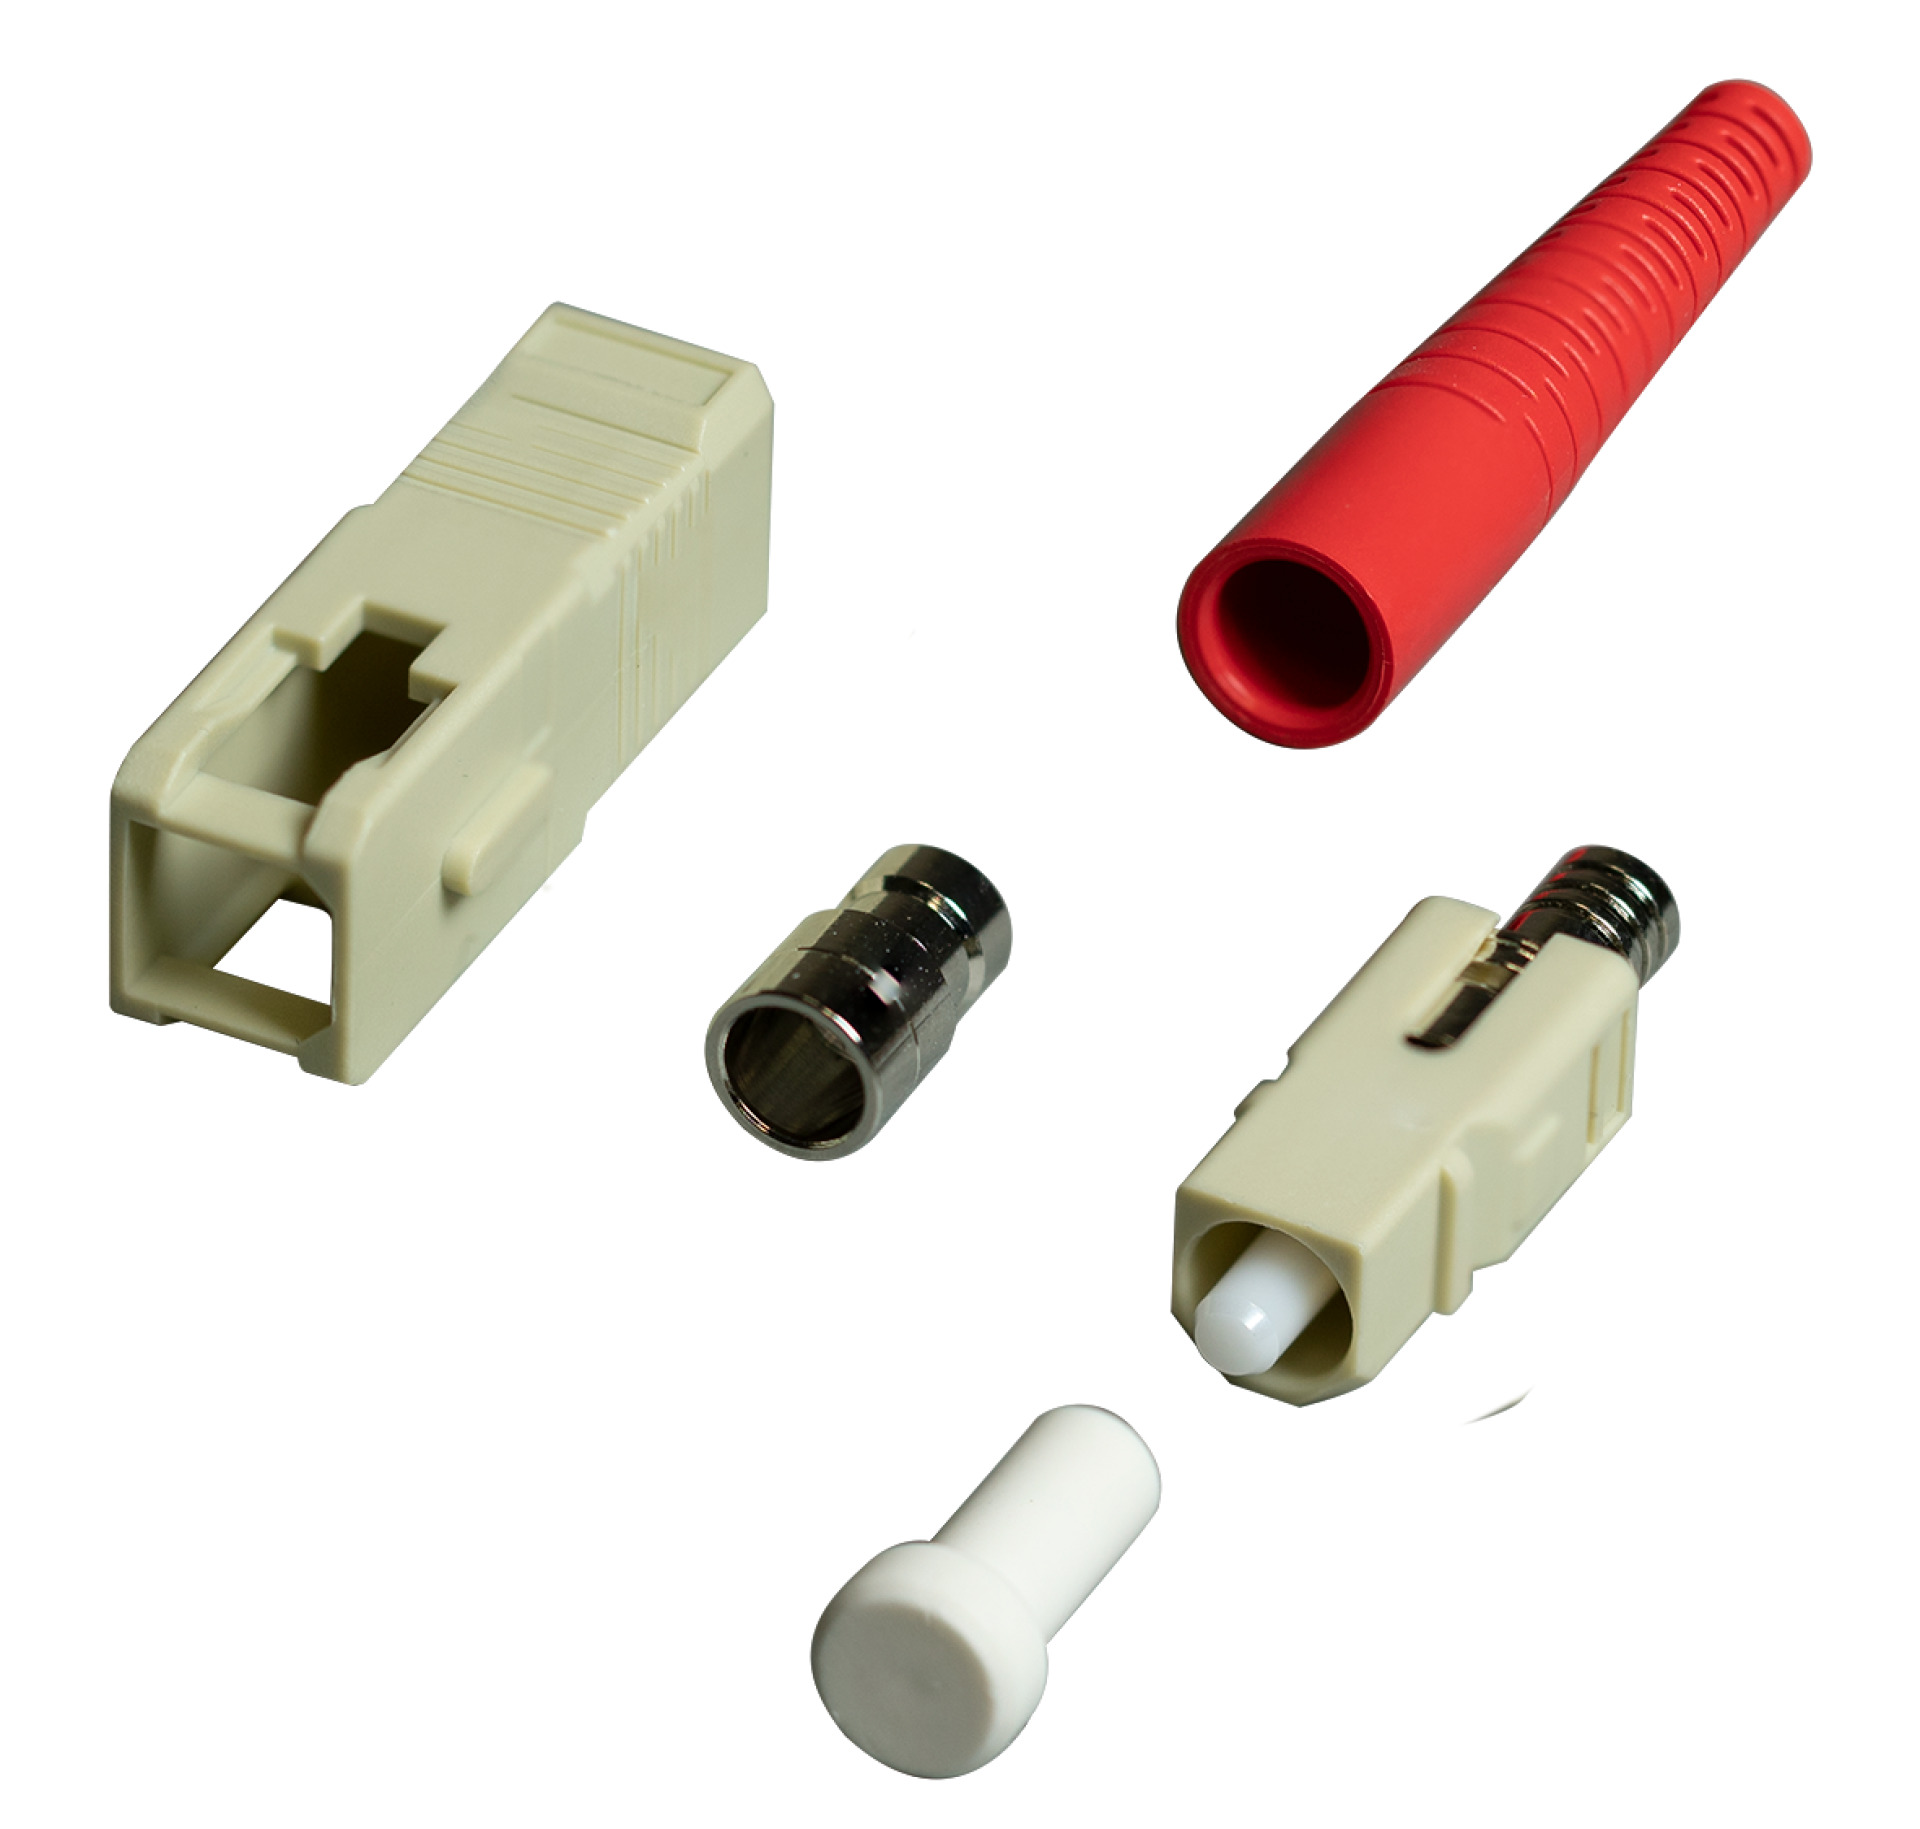 SC-Connector Simplex Multimode, 2mm, red grommet